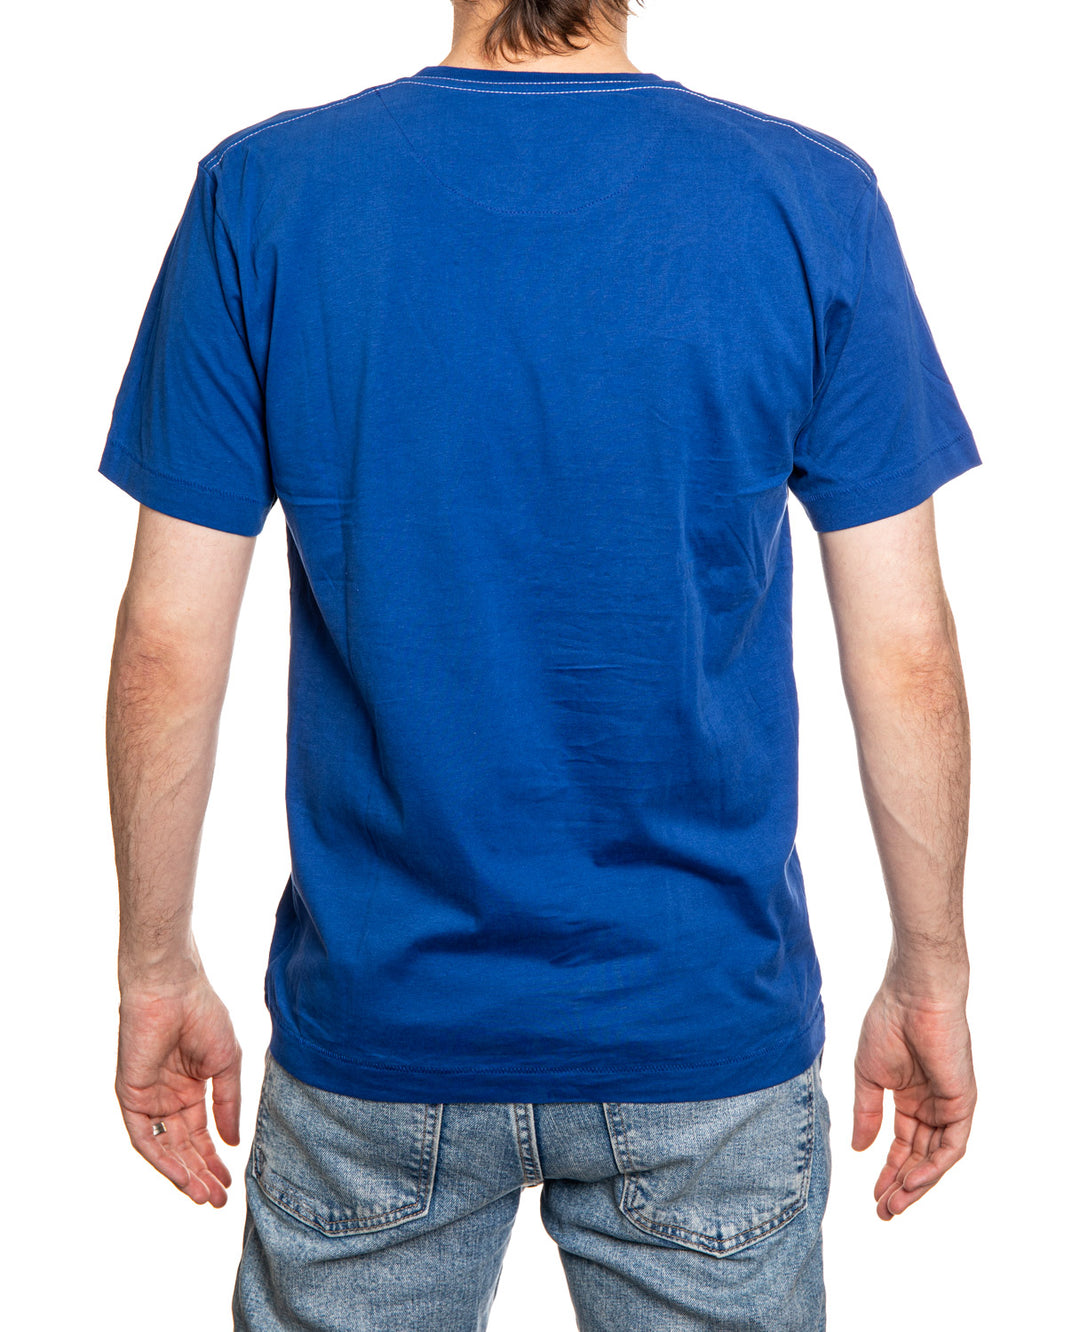 Bulletin MLB Toronto Blue Jays Men's Premium Brushed Cotton T-Shirt